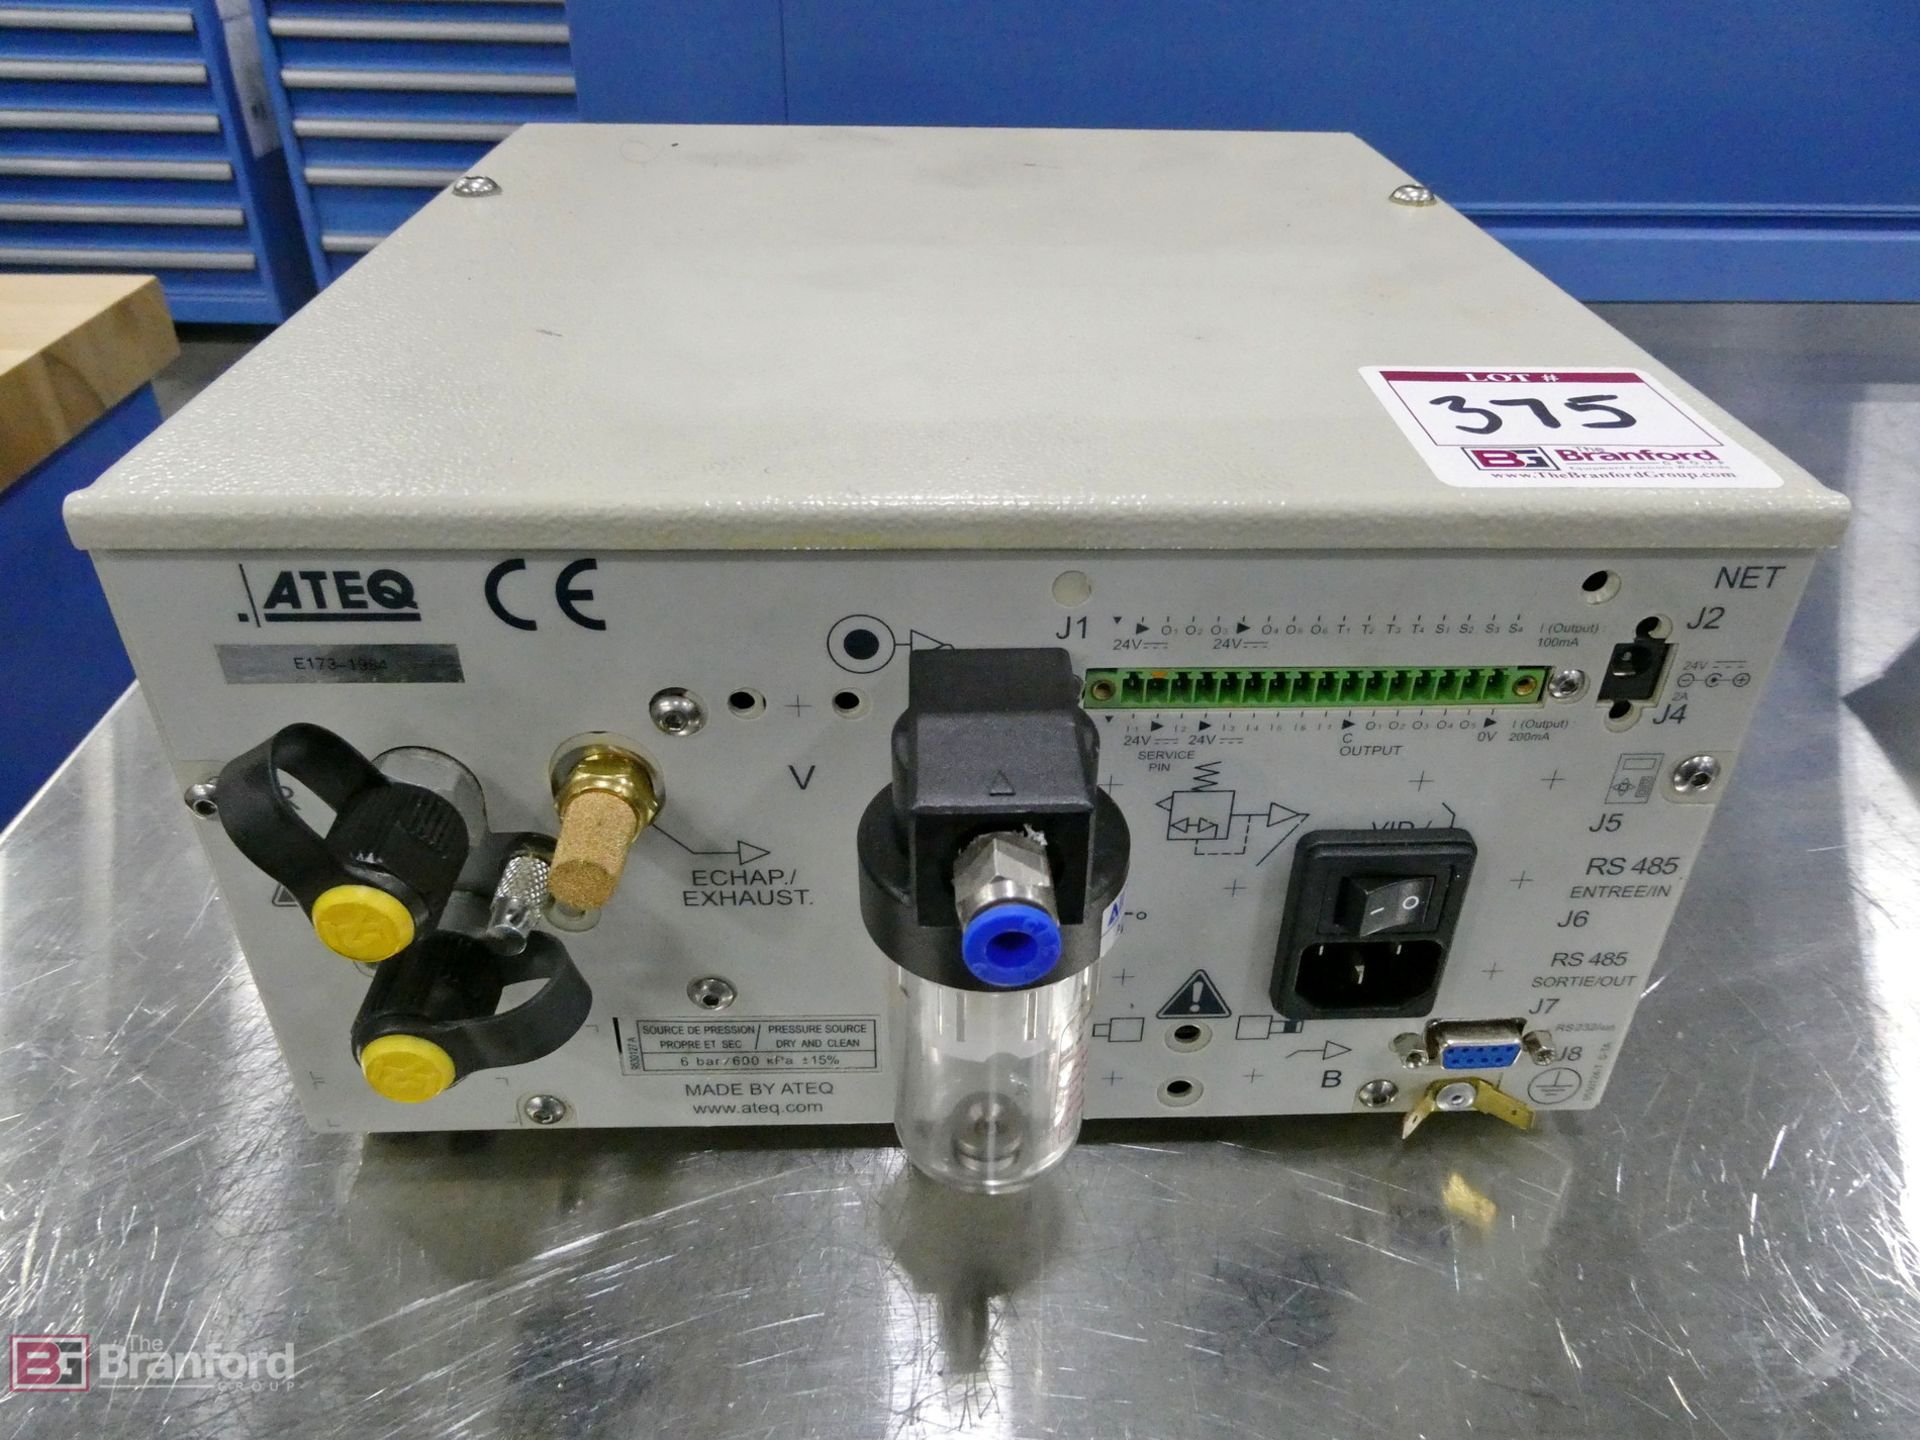 ATEQ Model F520HP, High Pressure Leak Tester - Image 2 of 2